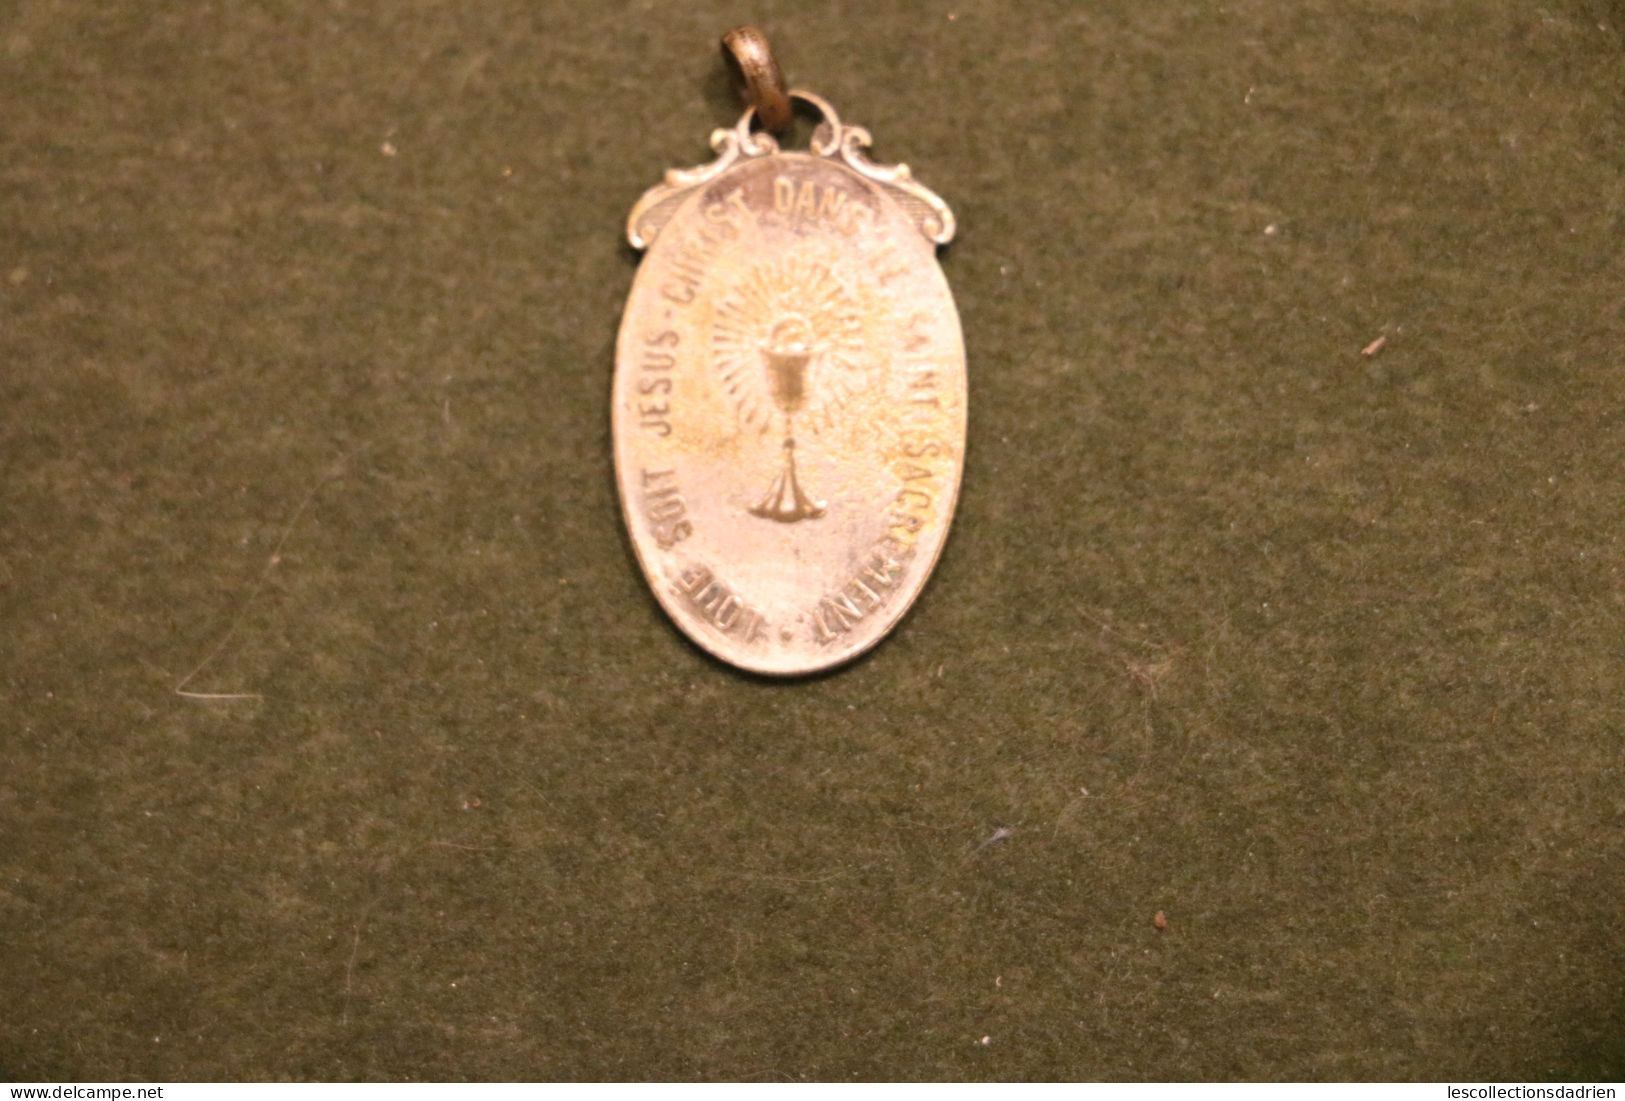 Médaille religieuse - Sainte Julienne de Cornillon - religious holy medal